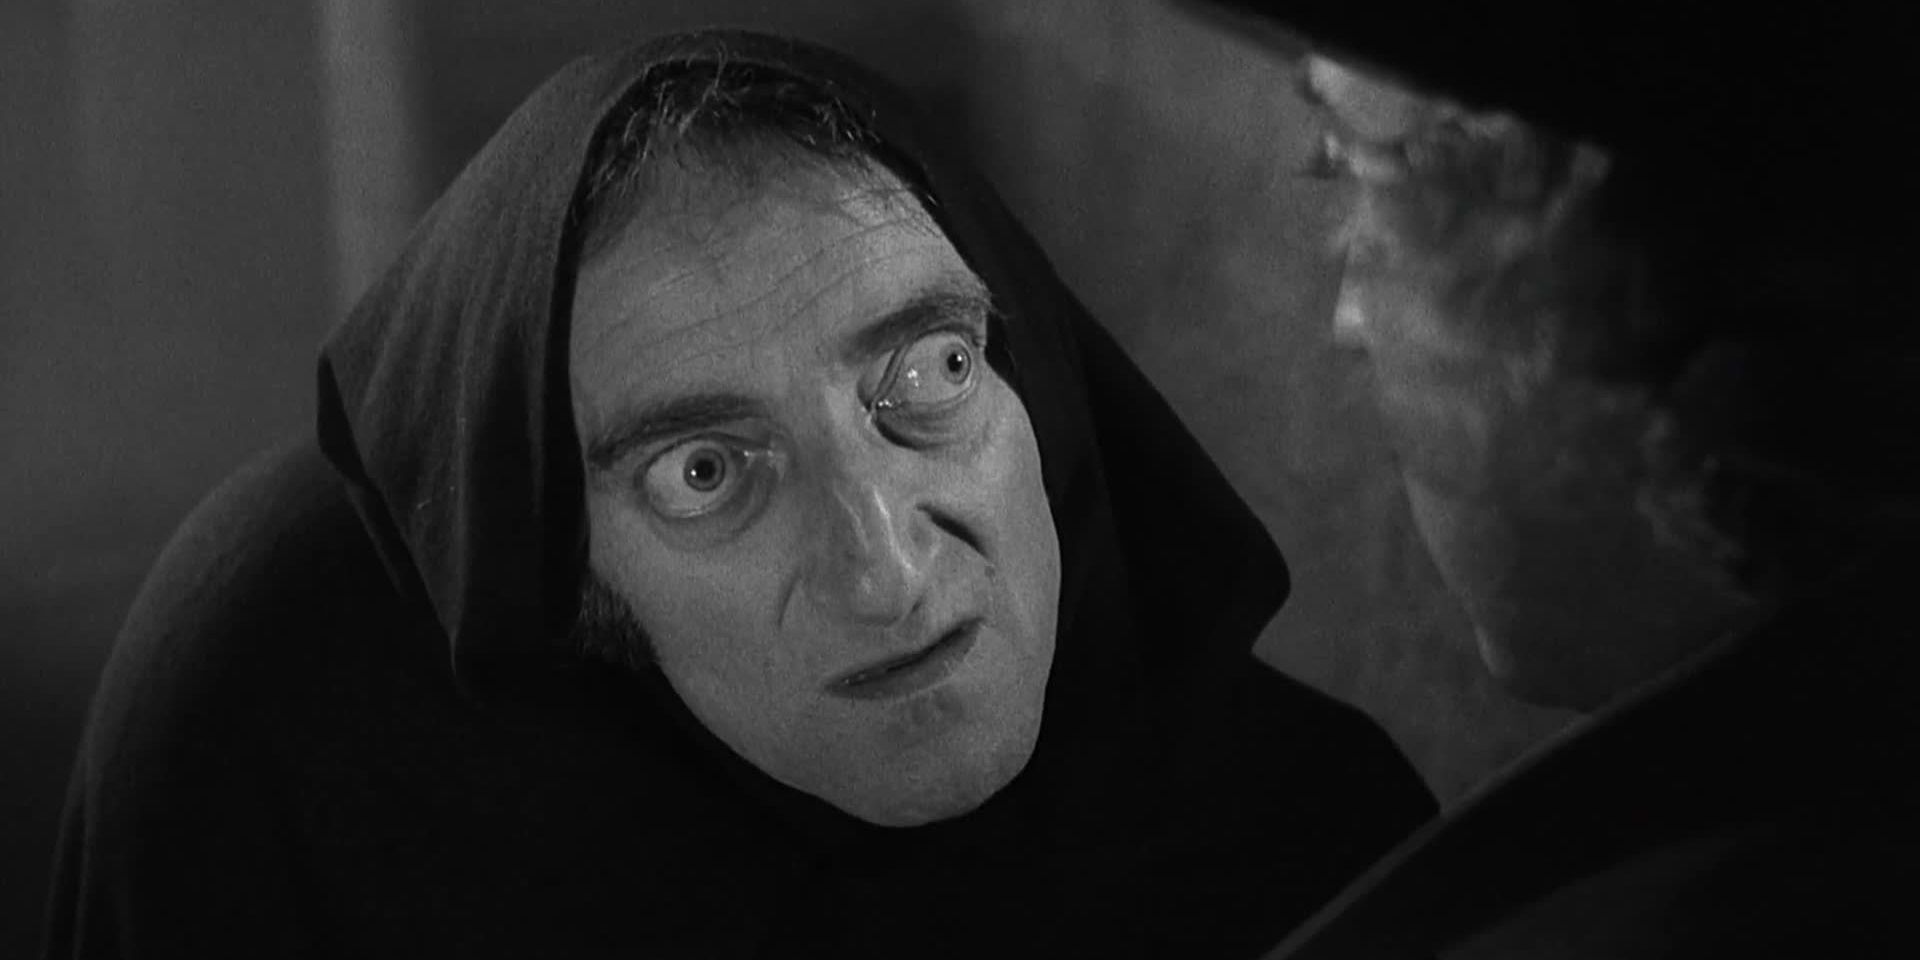 Marty Feldman as Igor looking questioningly in Young Frankenstein